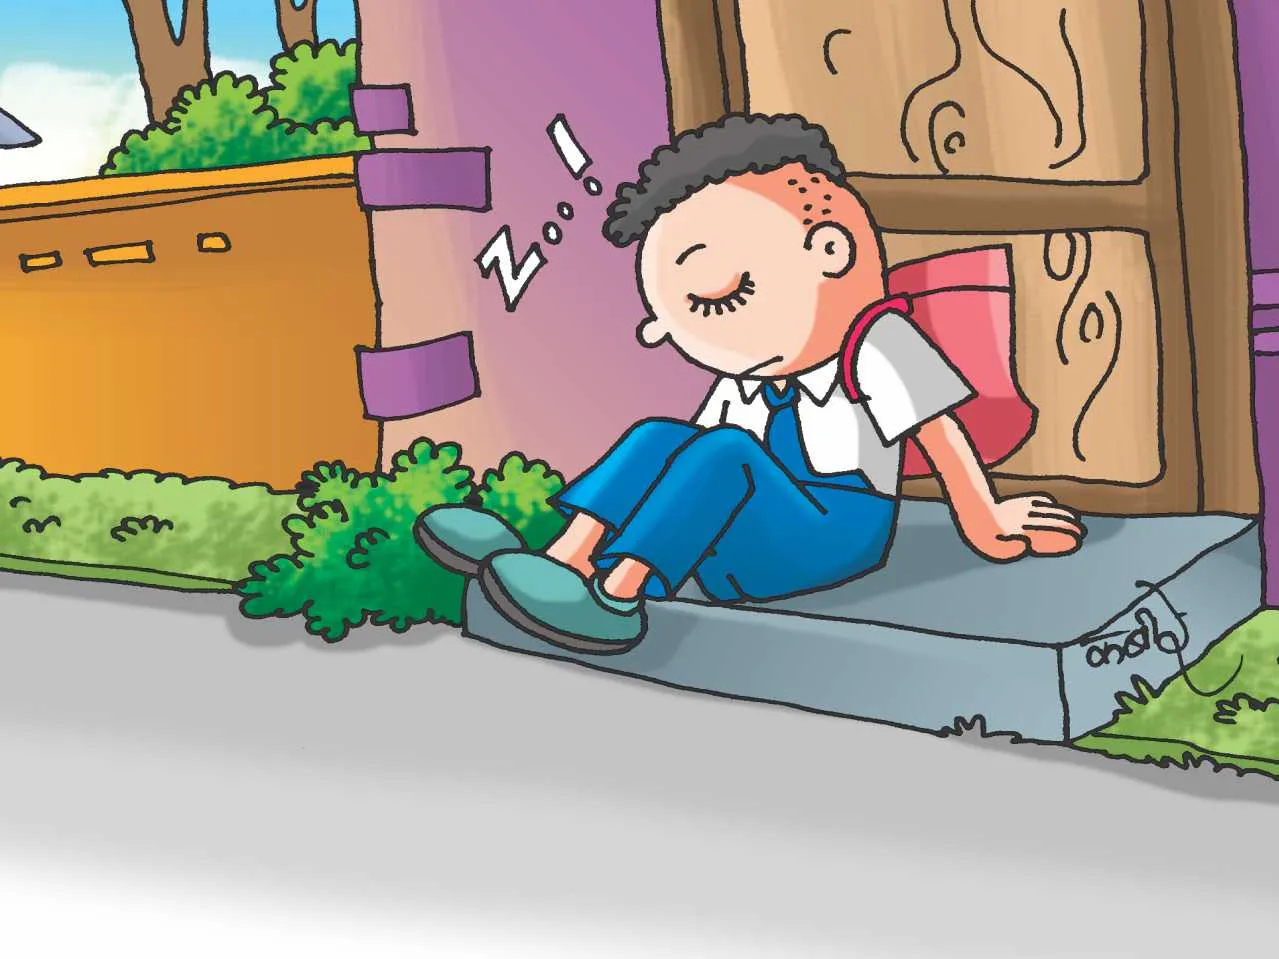 Kid sleeping outside his home cartoon image